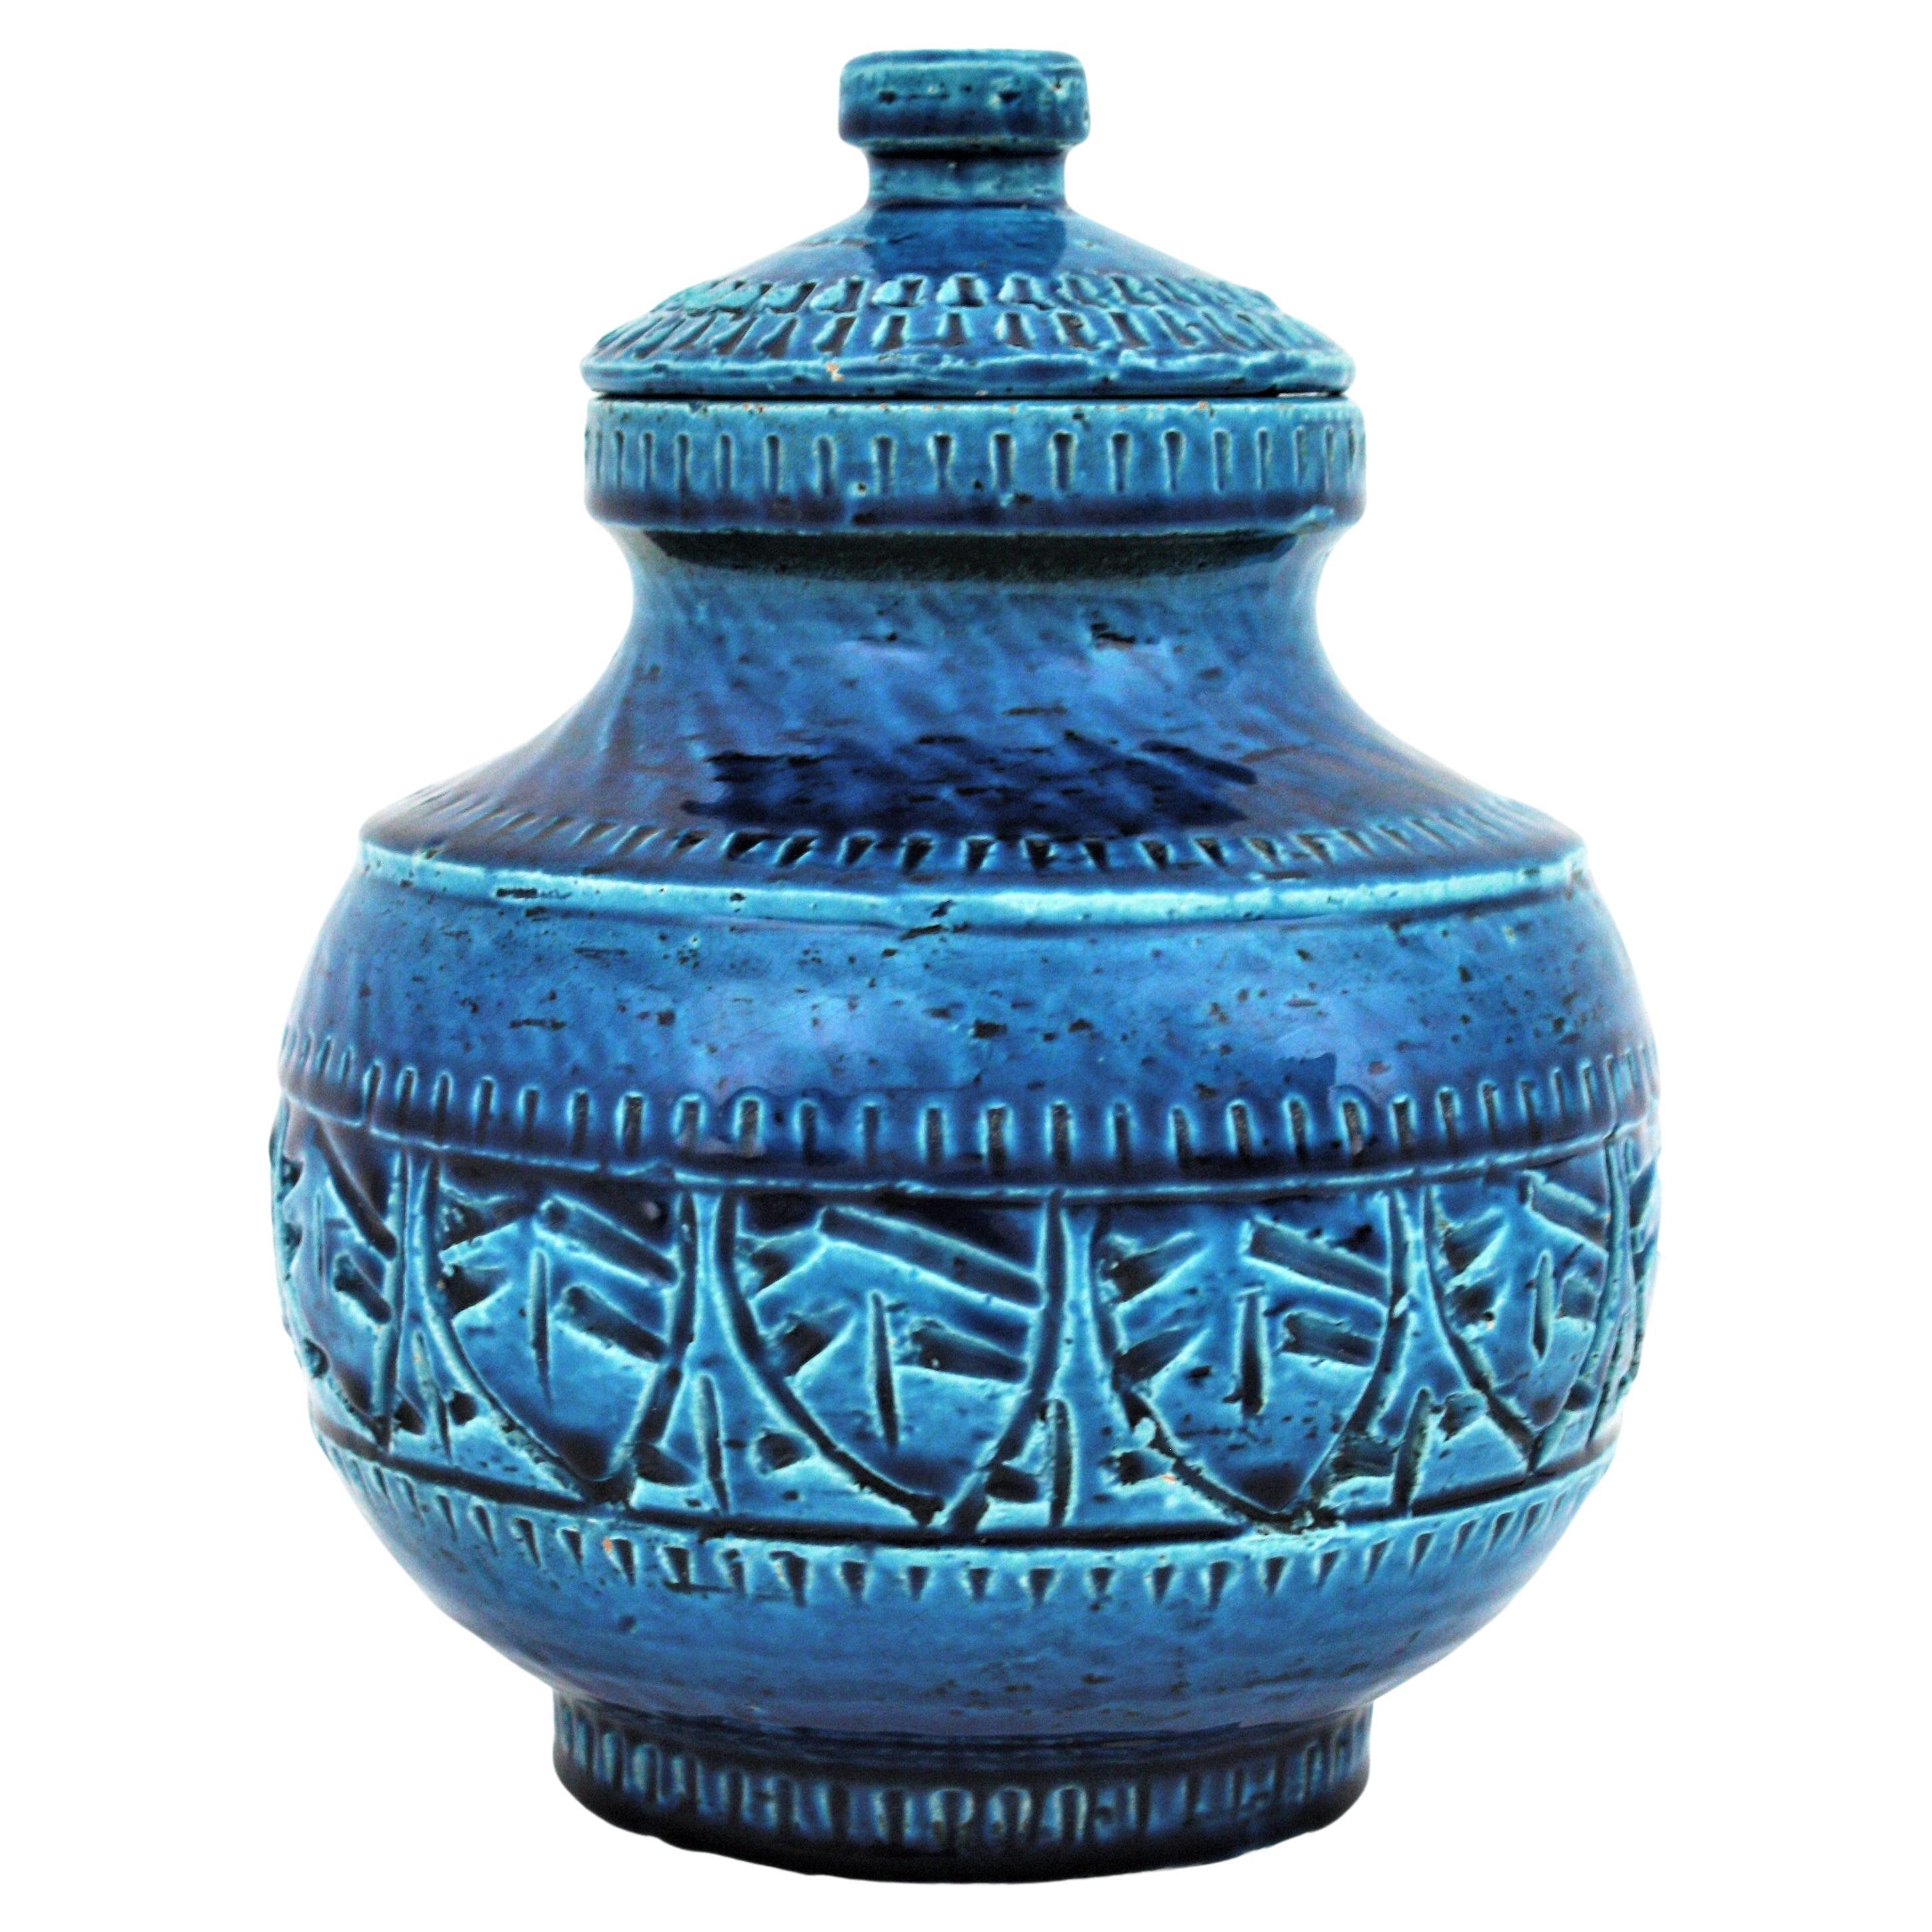 Sic Rimini Blu Glazed Ceramic Large Lidded Vessel / Box Bitossi Aldo Londi Style